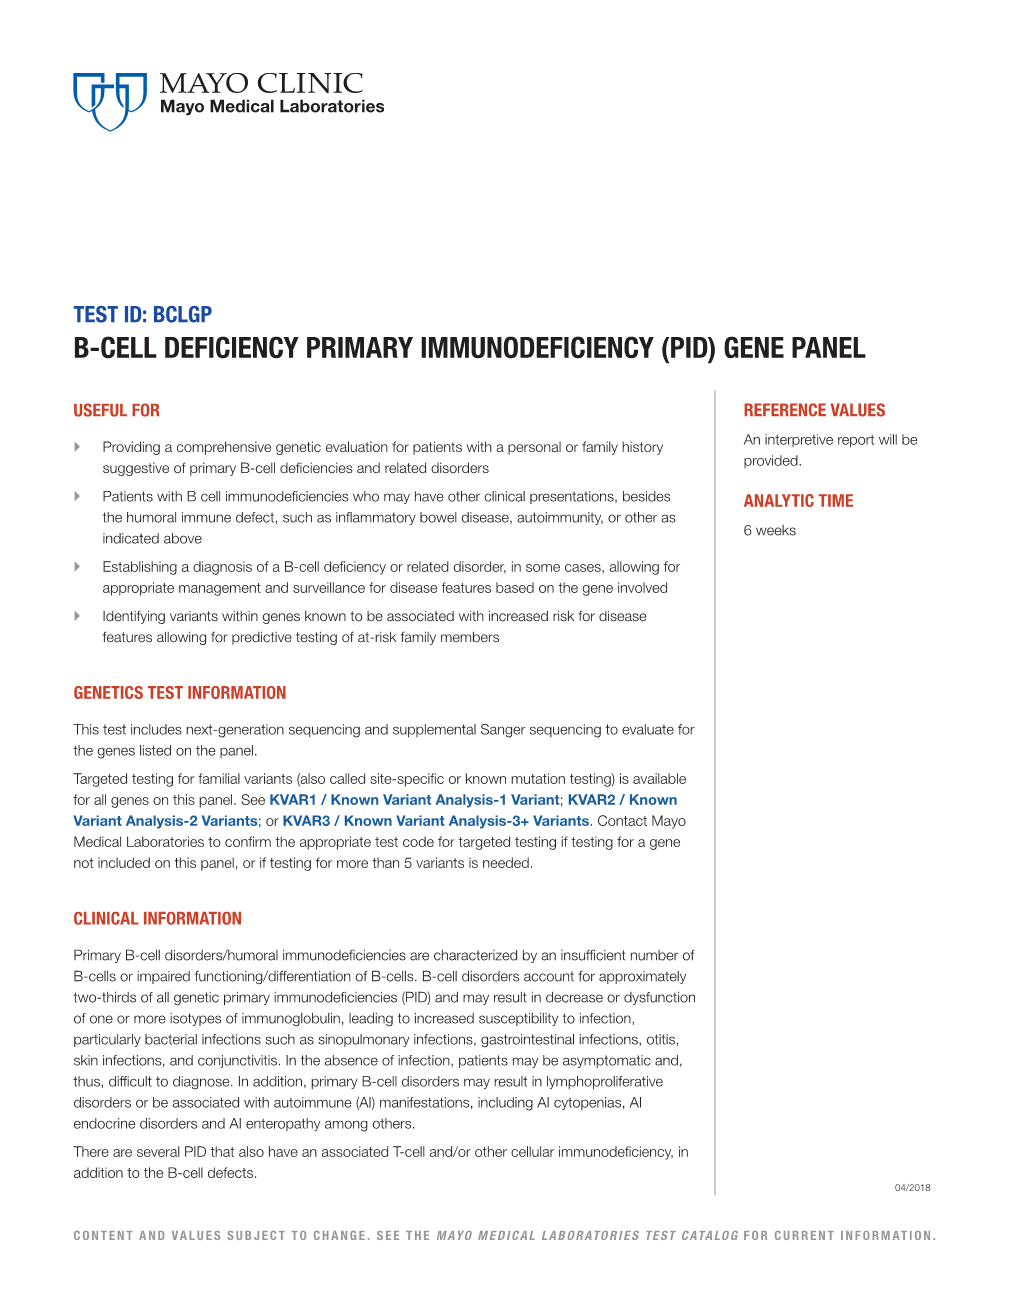 B-Cell Deficiency Primary Immunodeficiency (Pid) Gene Panel